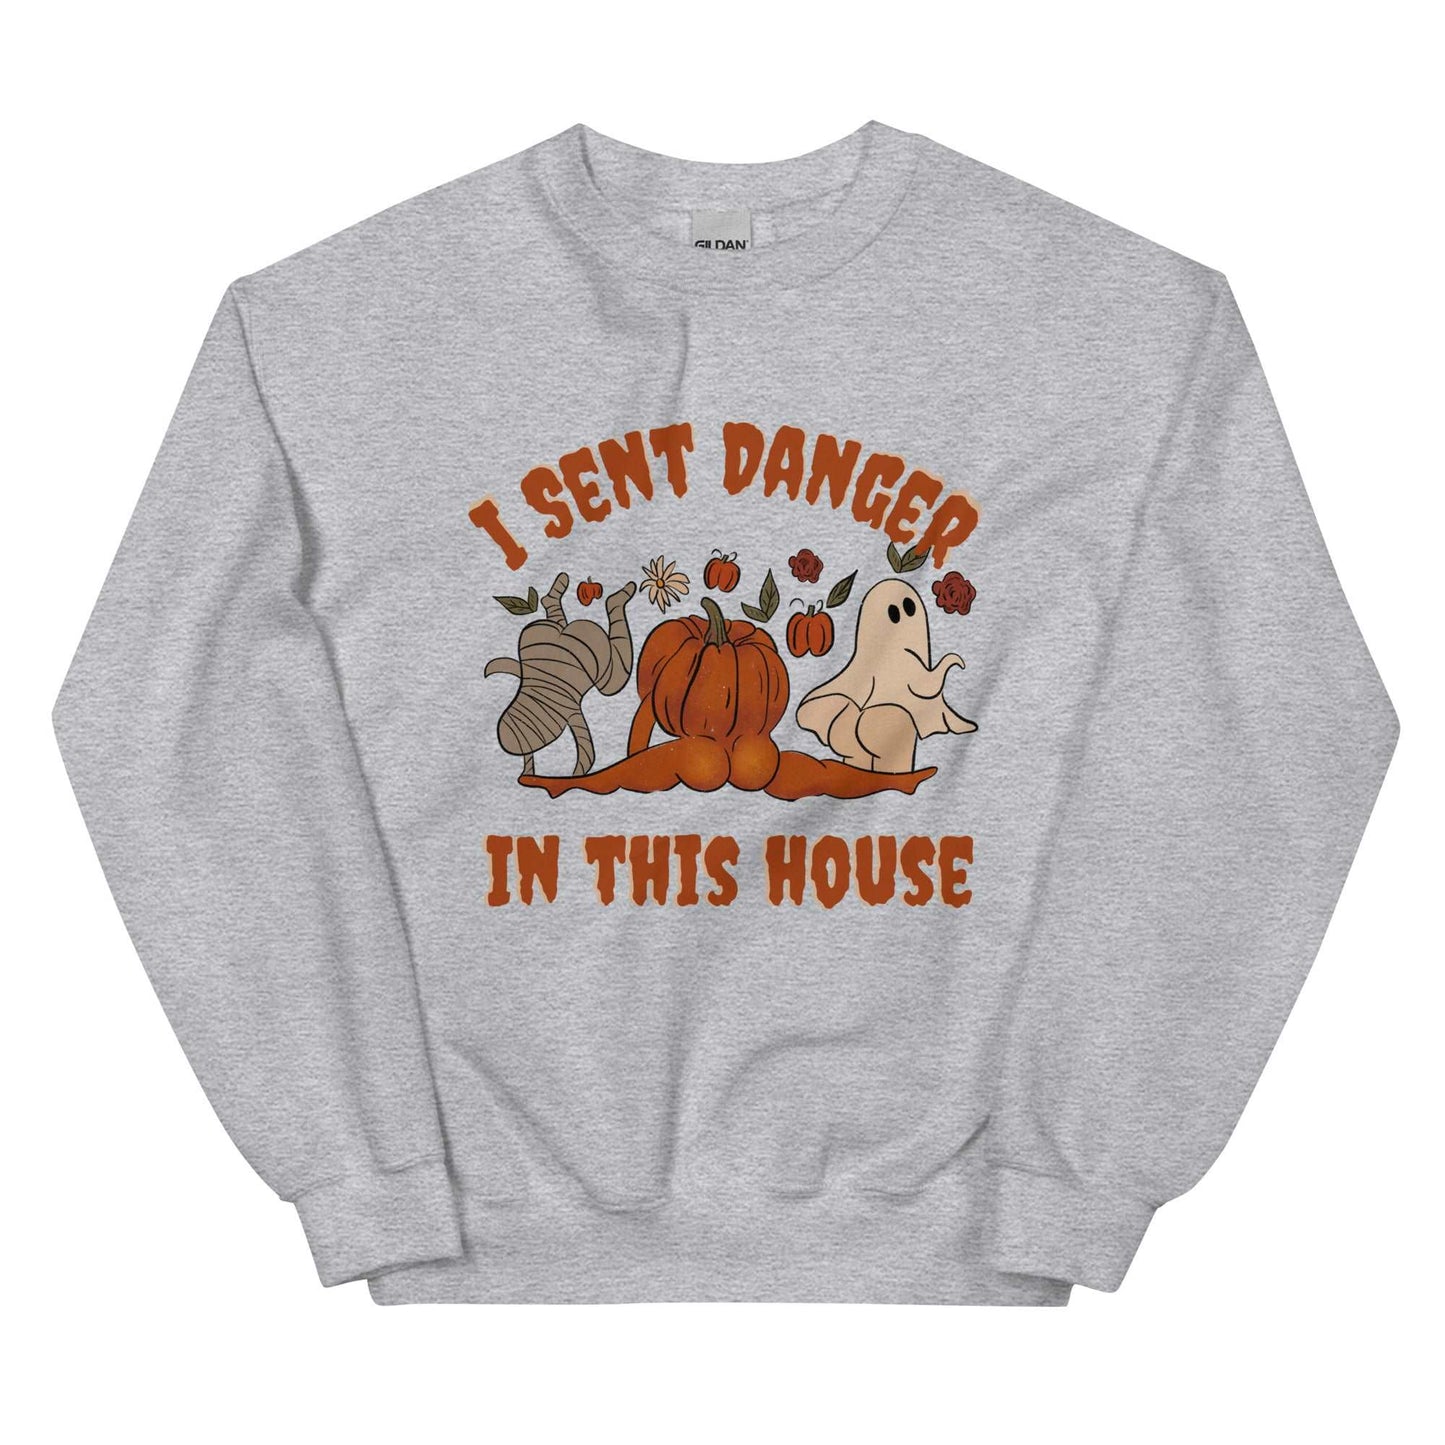 I SENT DANGER IN THIS HOUSE - Unisex Sweatshirt